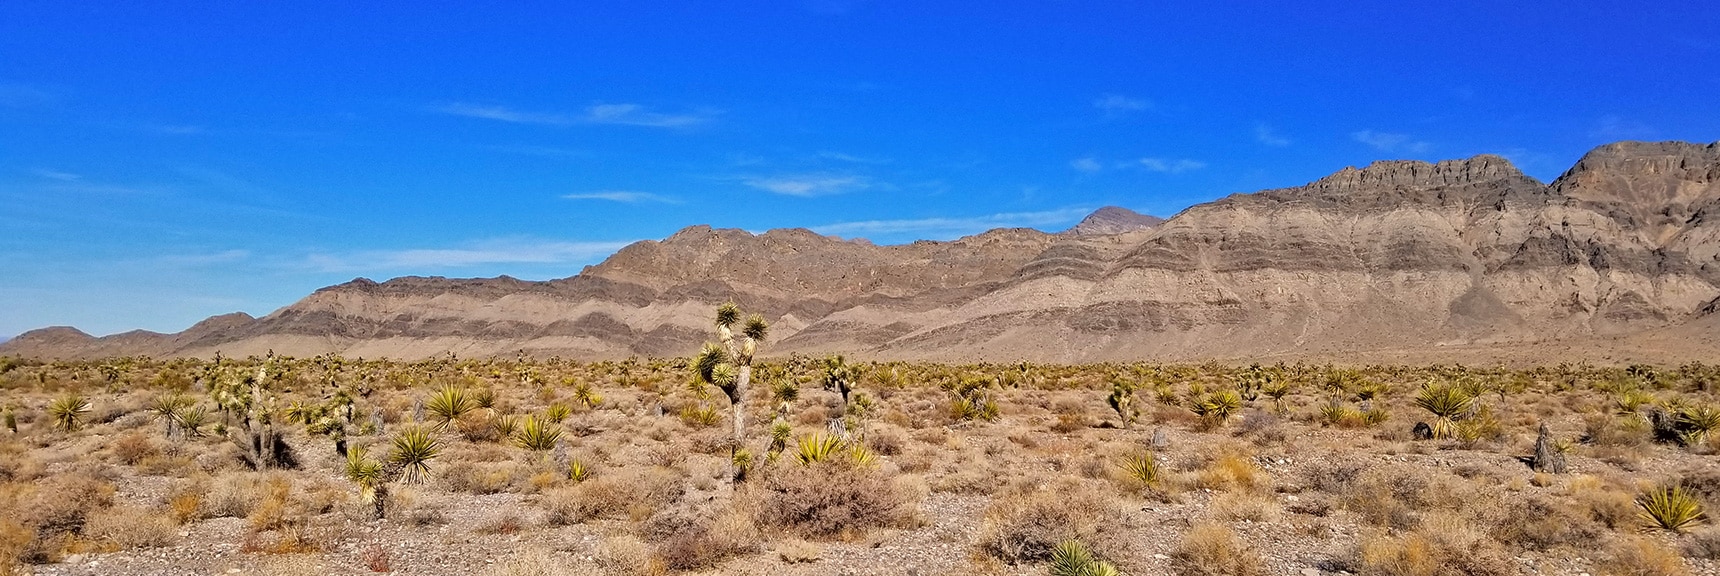 Southwest Side of Fossil Ridge from Gass Peak Road | Gass Peak Road Circuit | Desert National Wildlife Refuge | Nevada